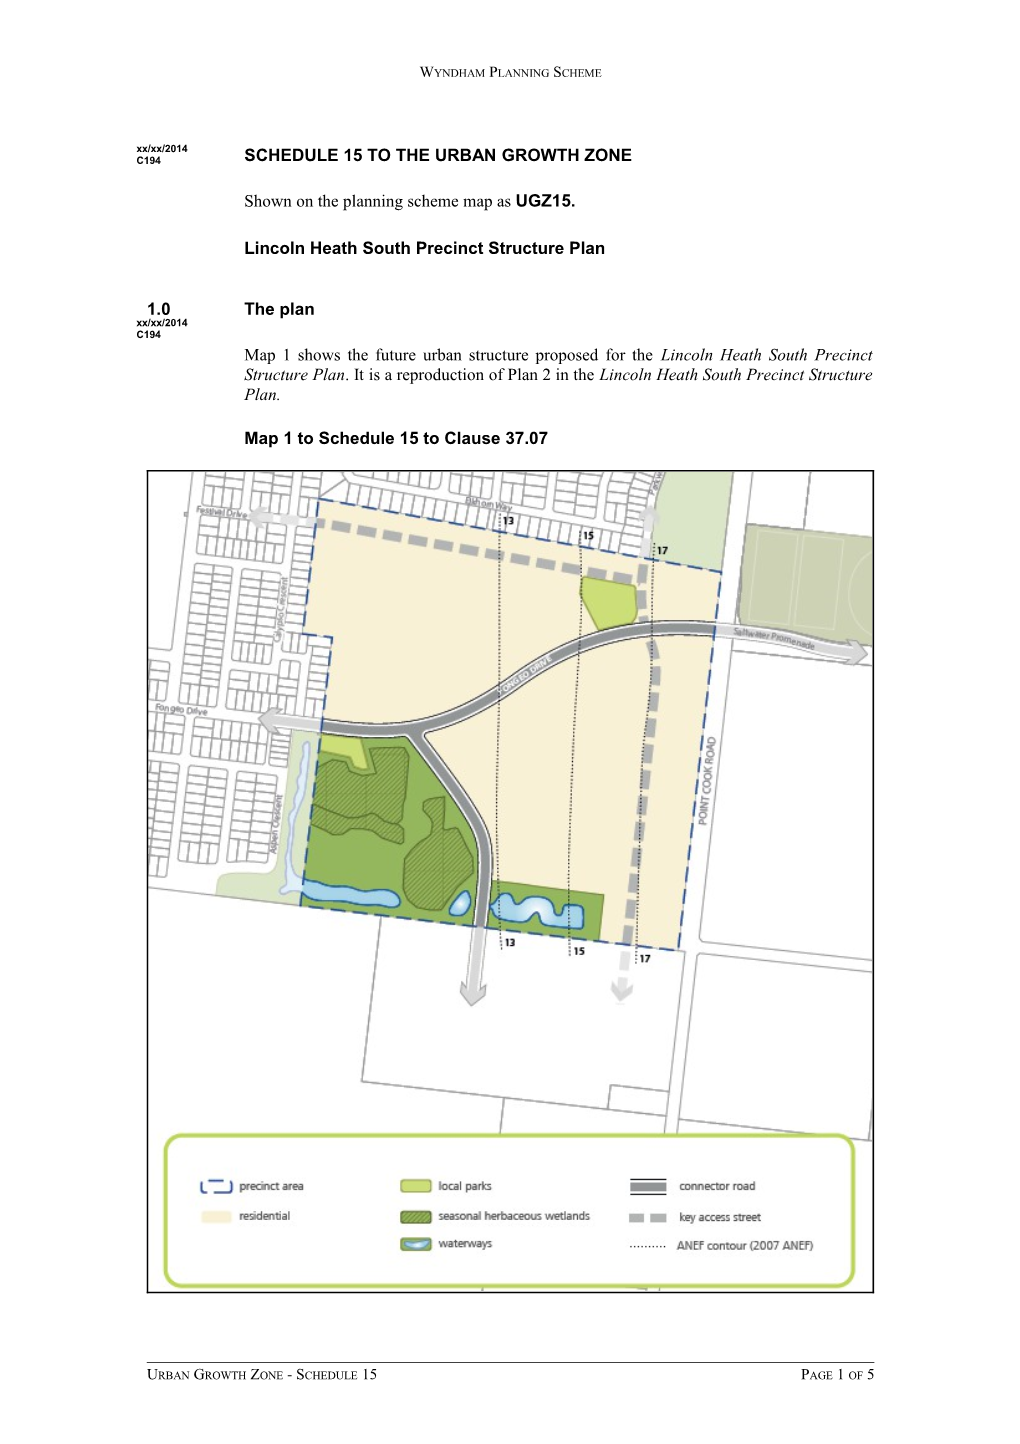 Lincoln Heath South Precinct Structure Plan